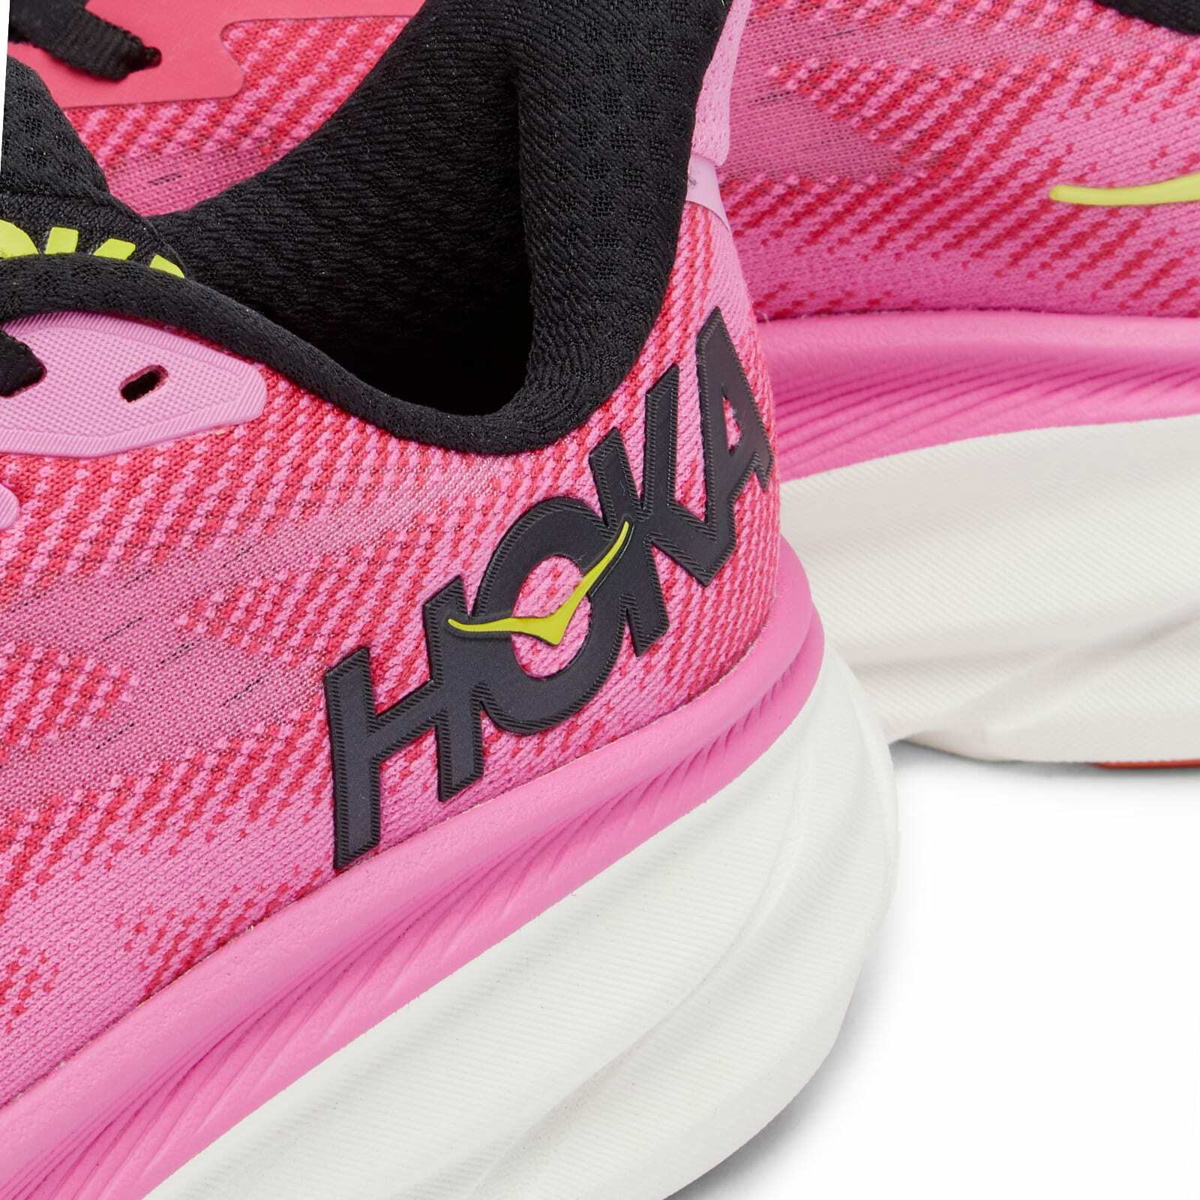 Hoka One One Clifton 9 Raspberry Running Shoes for Women's